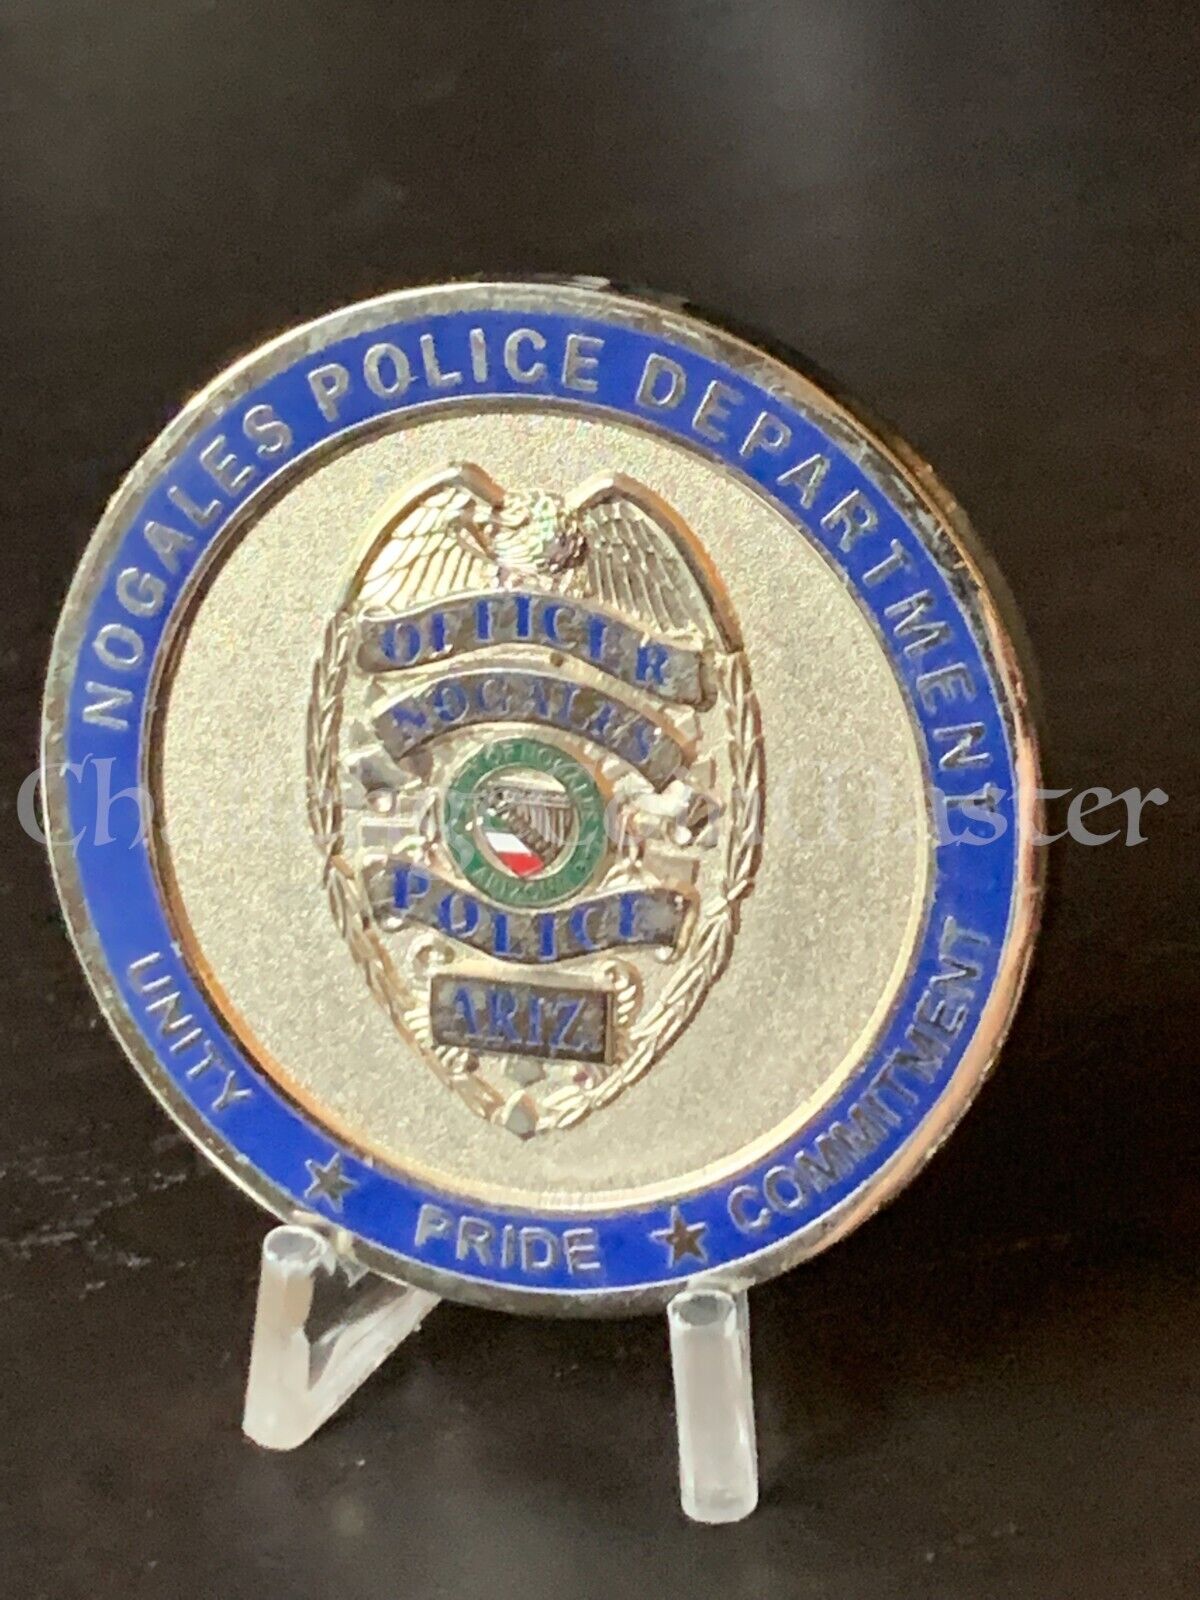 phoenix police department